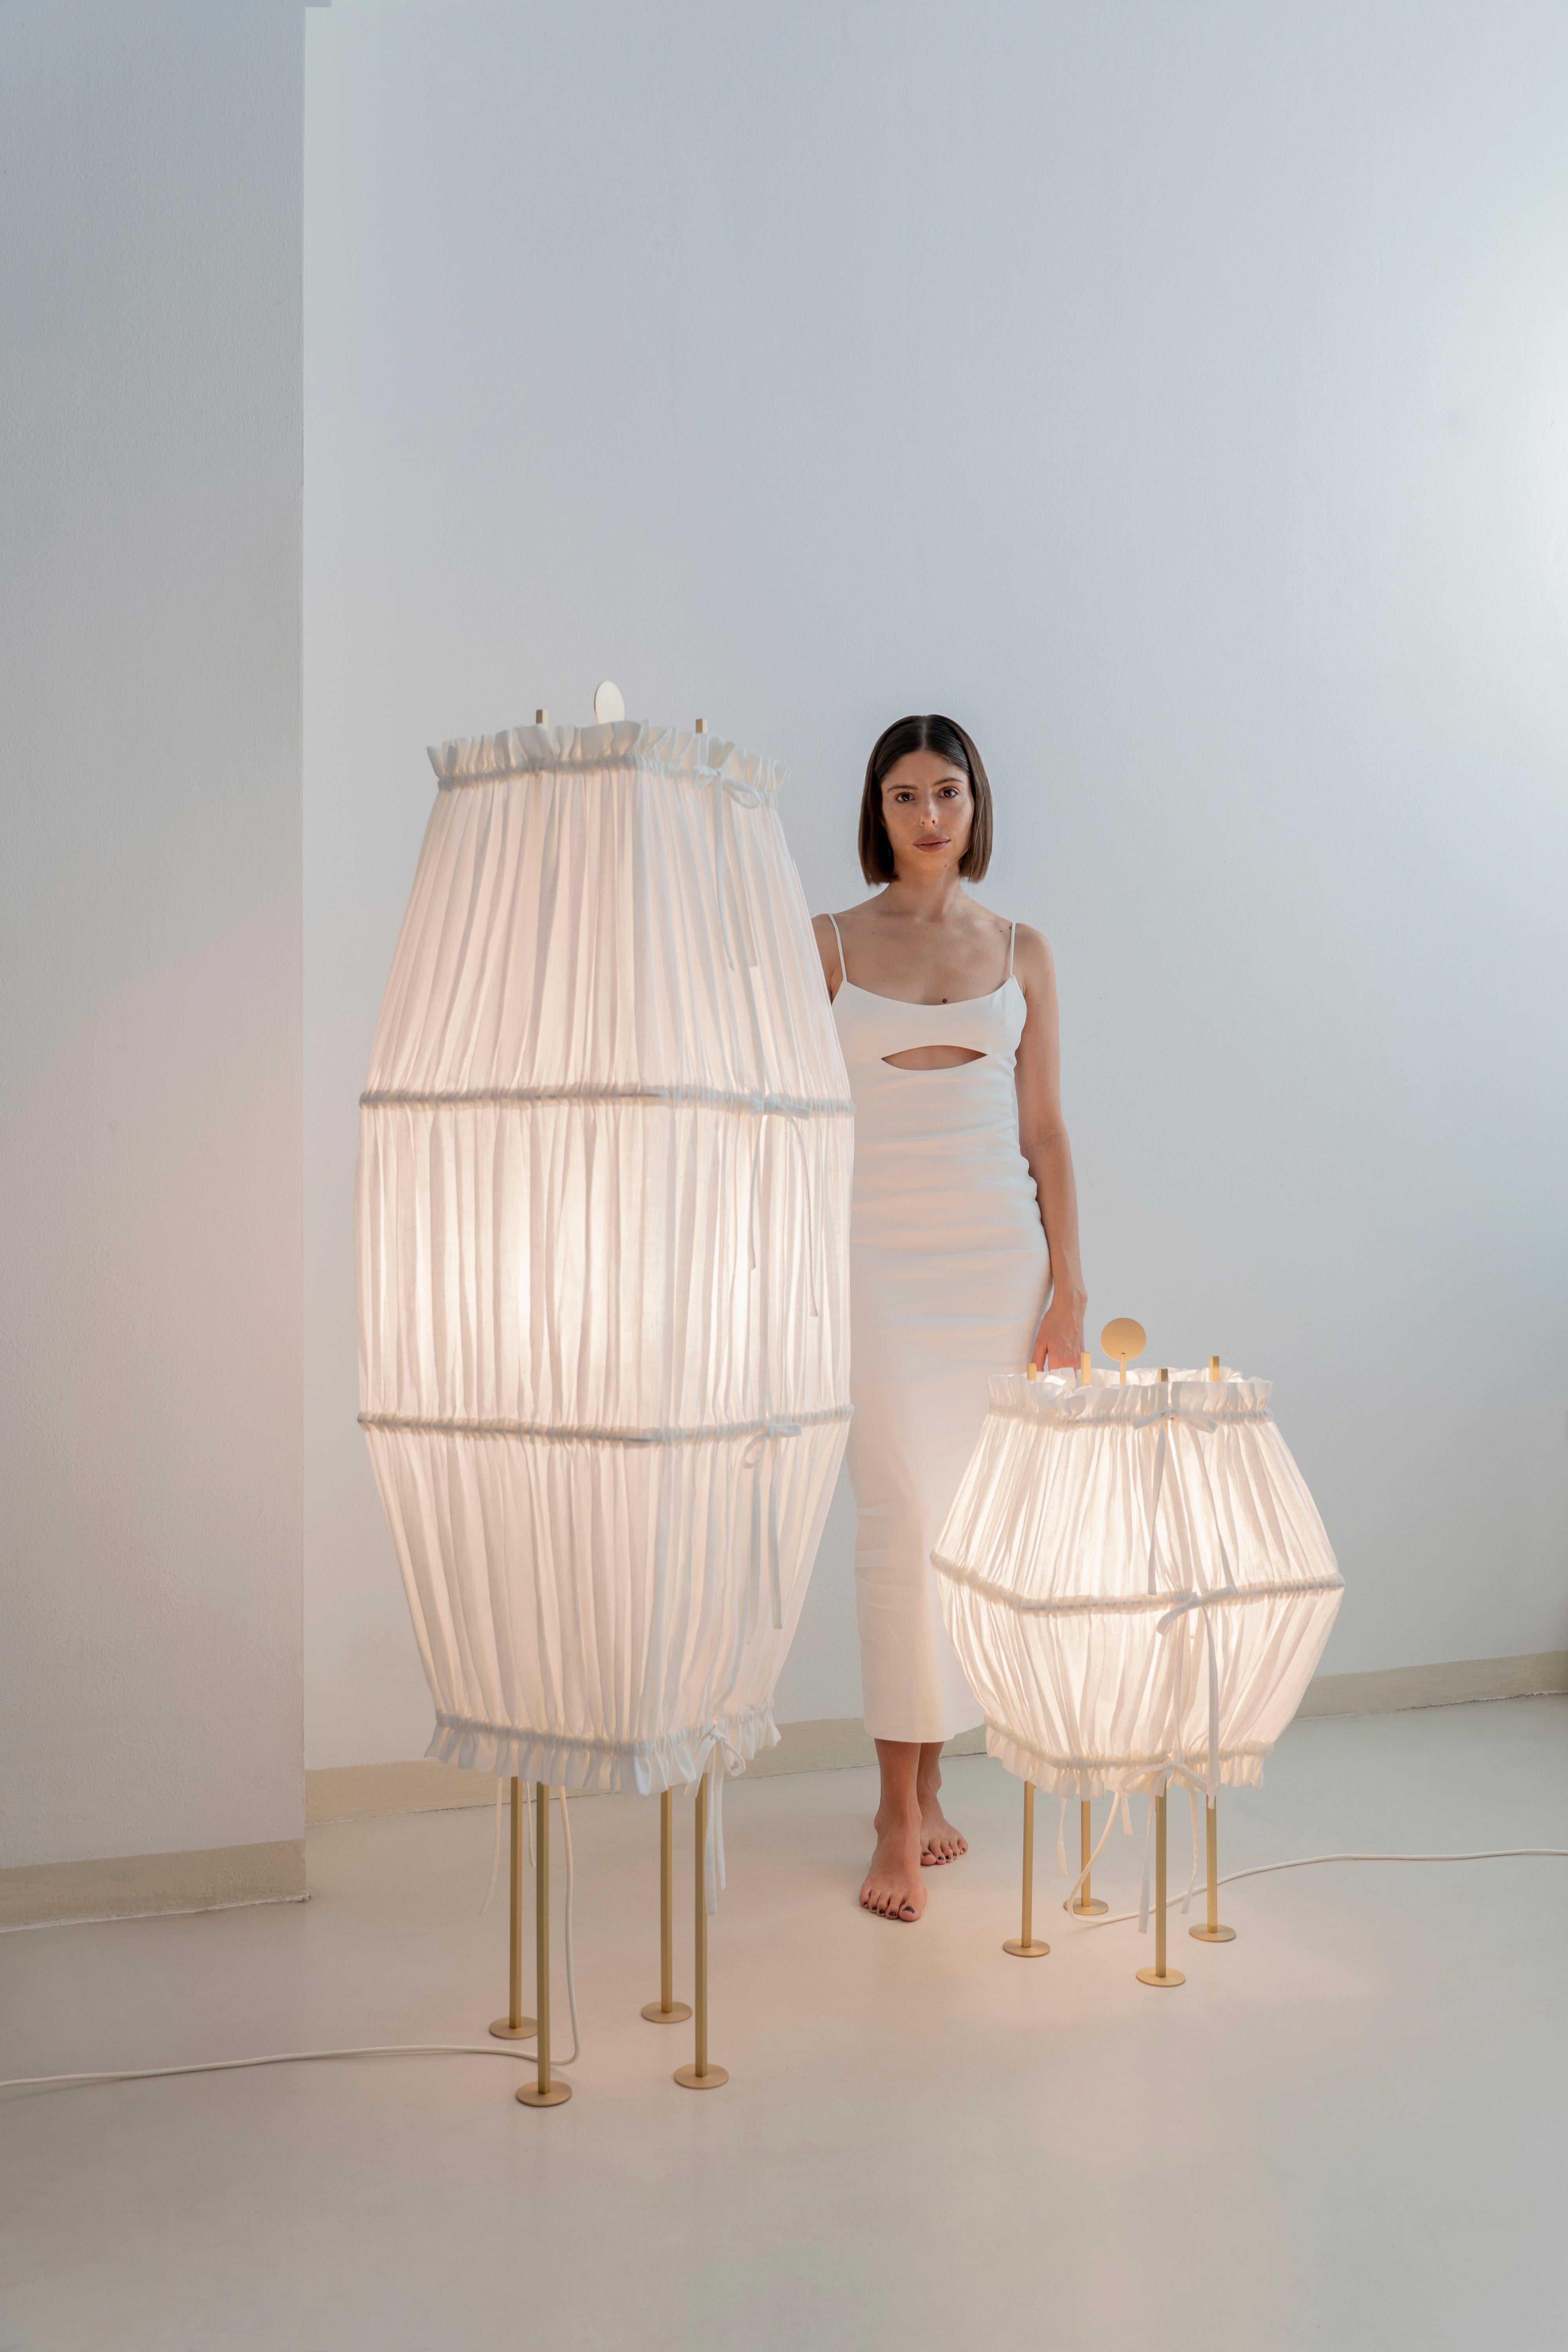 Italian Set of 2 Presenza Floor Lamps by Agustina Bottoni